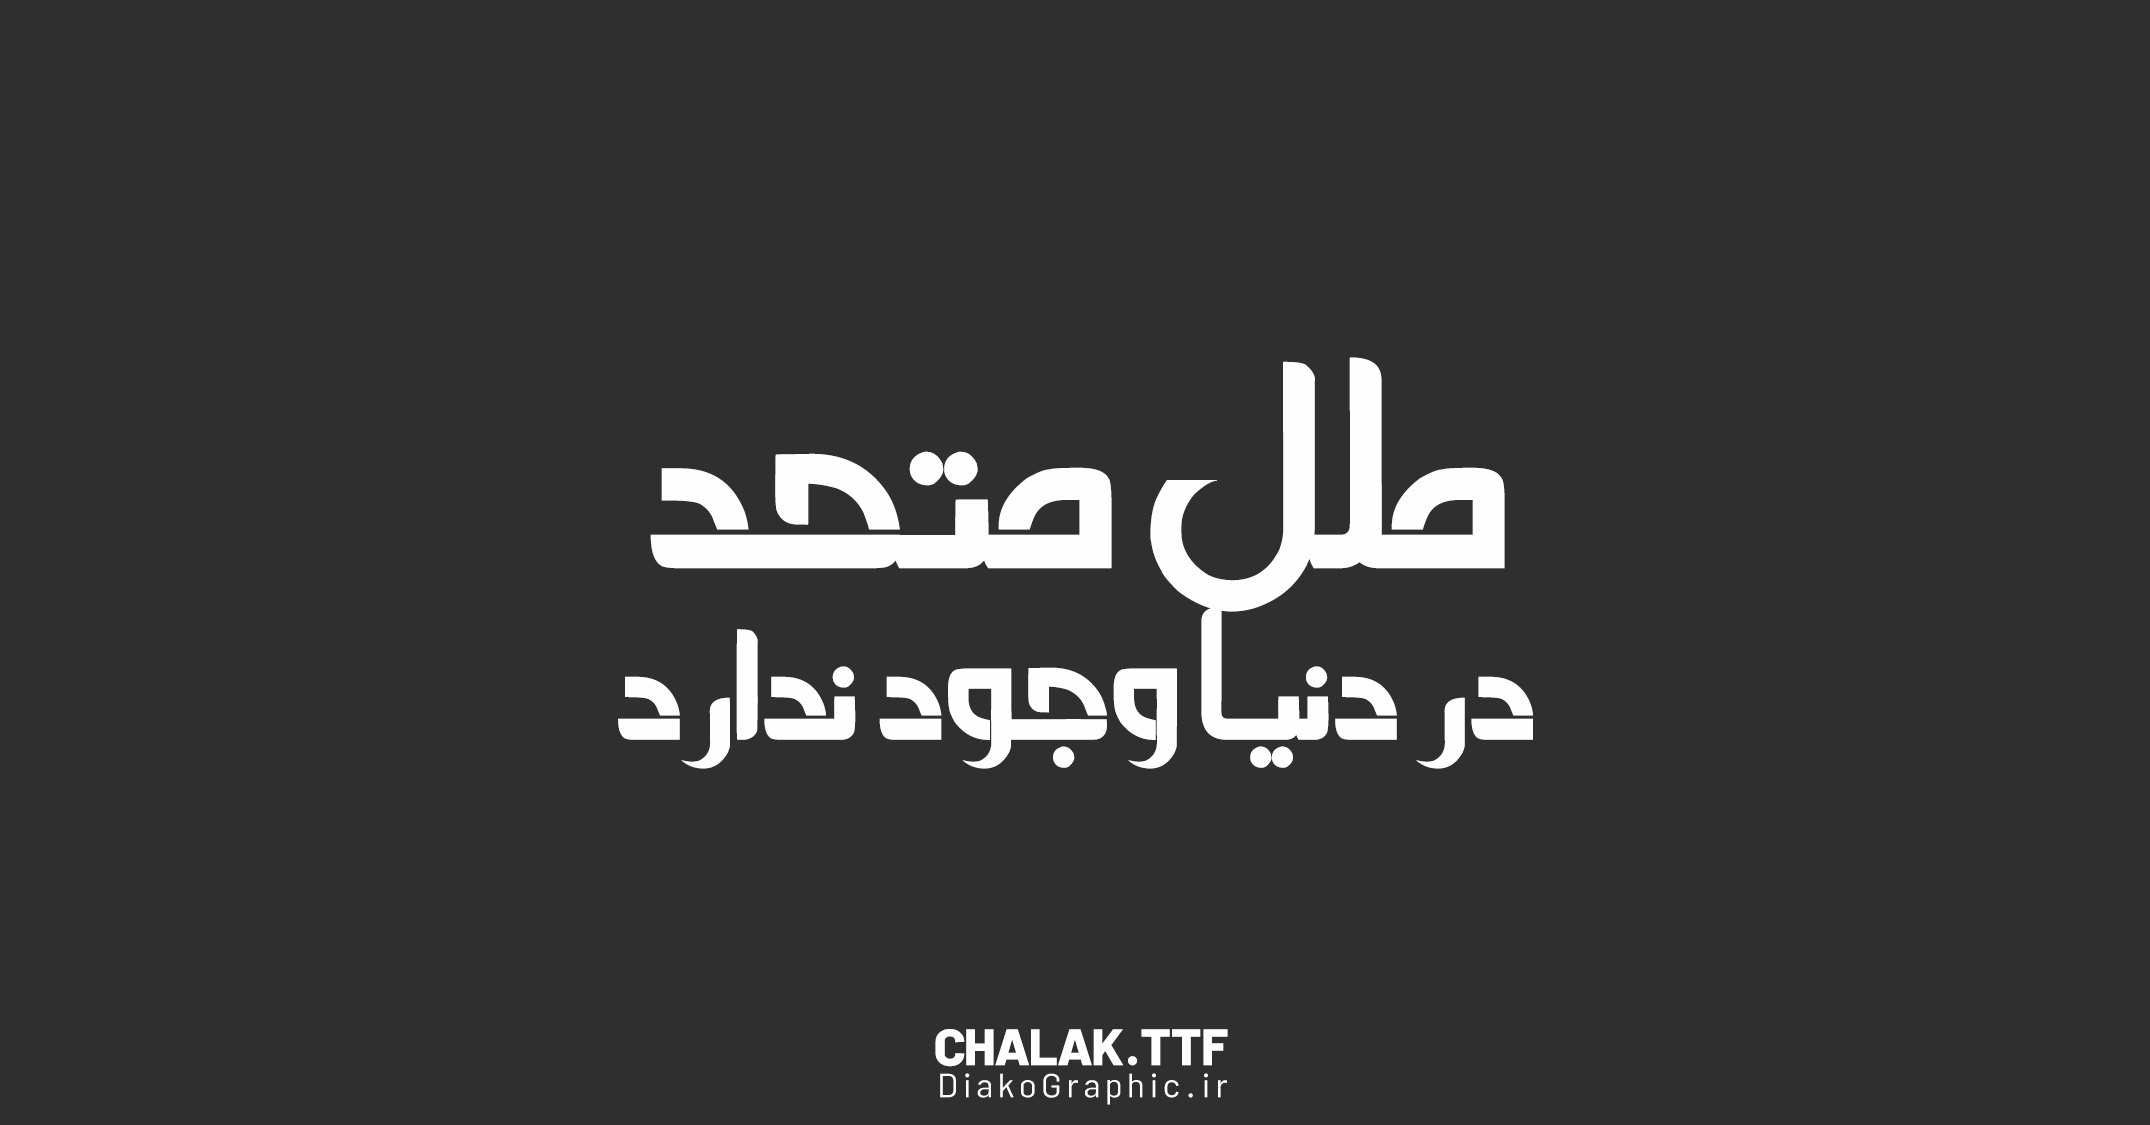 دانلود فونت تایپوگرافی فارسی چالاک Chalak Font +نسخه TTF و PSD